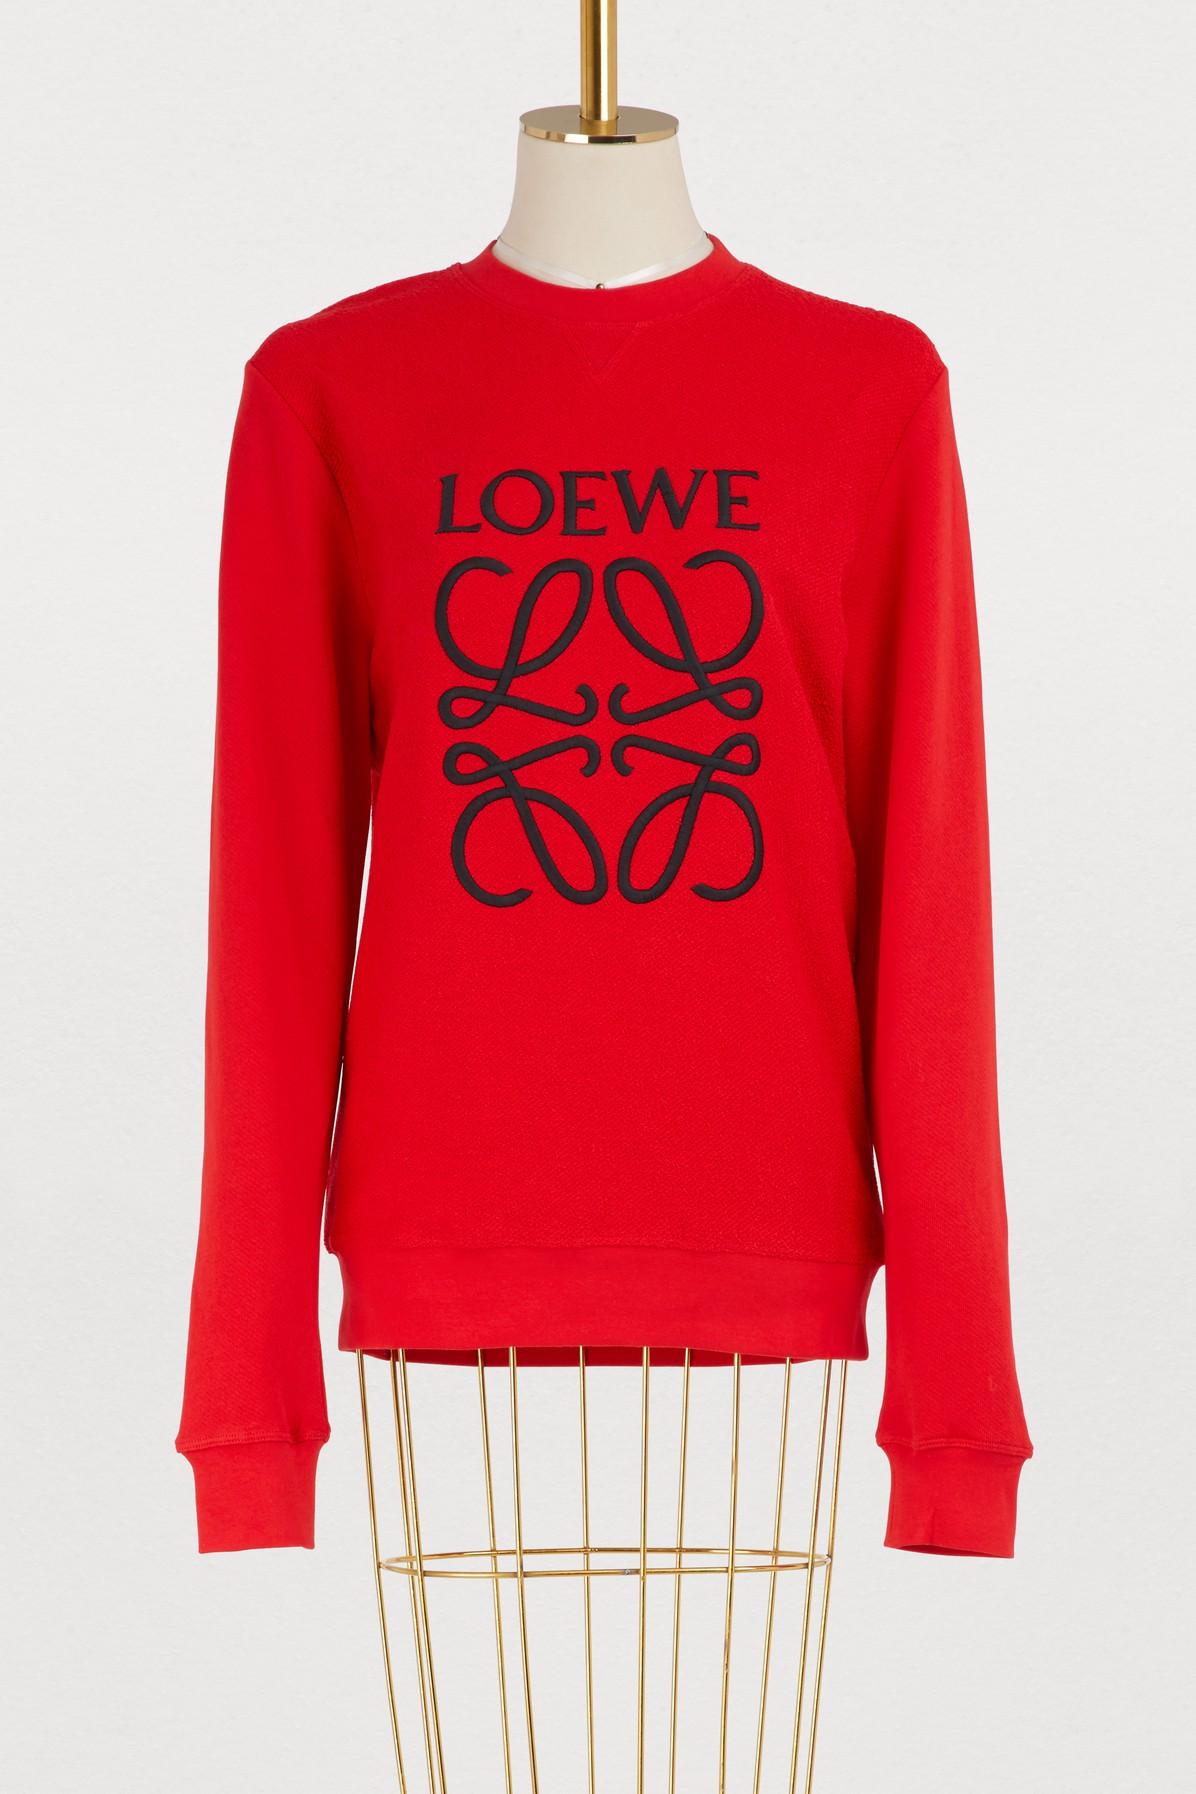 Loewe Cotton Anagram Sweatshirt in Red | Lyst